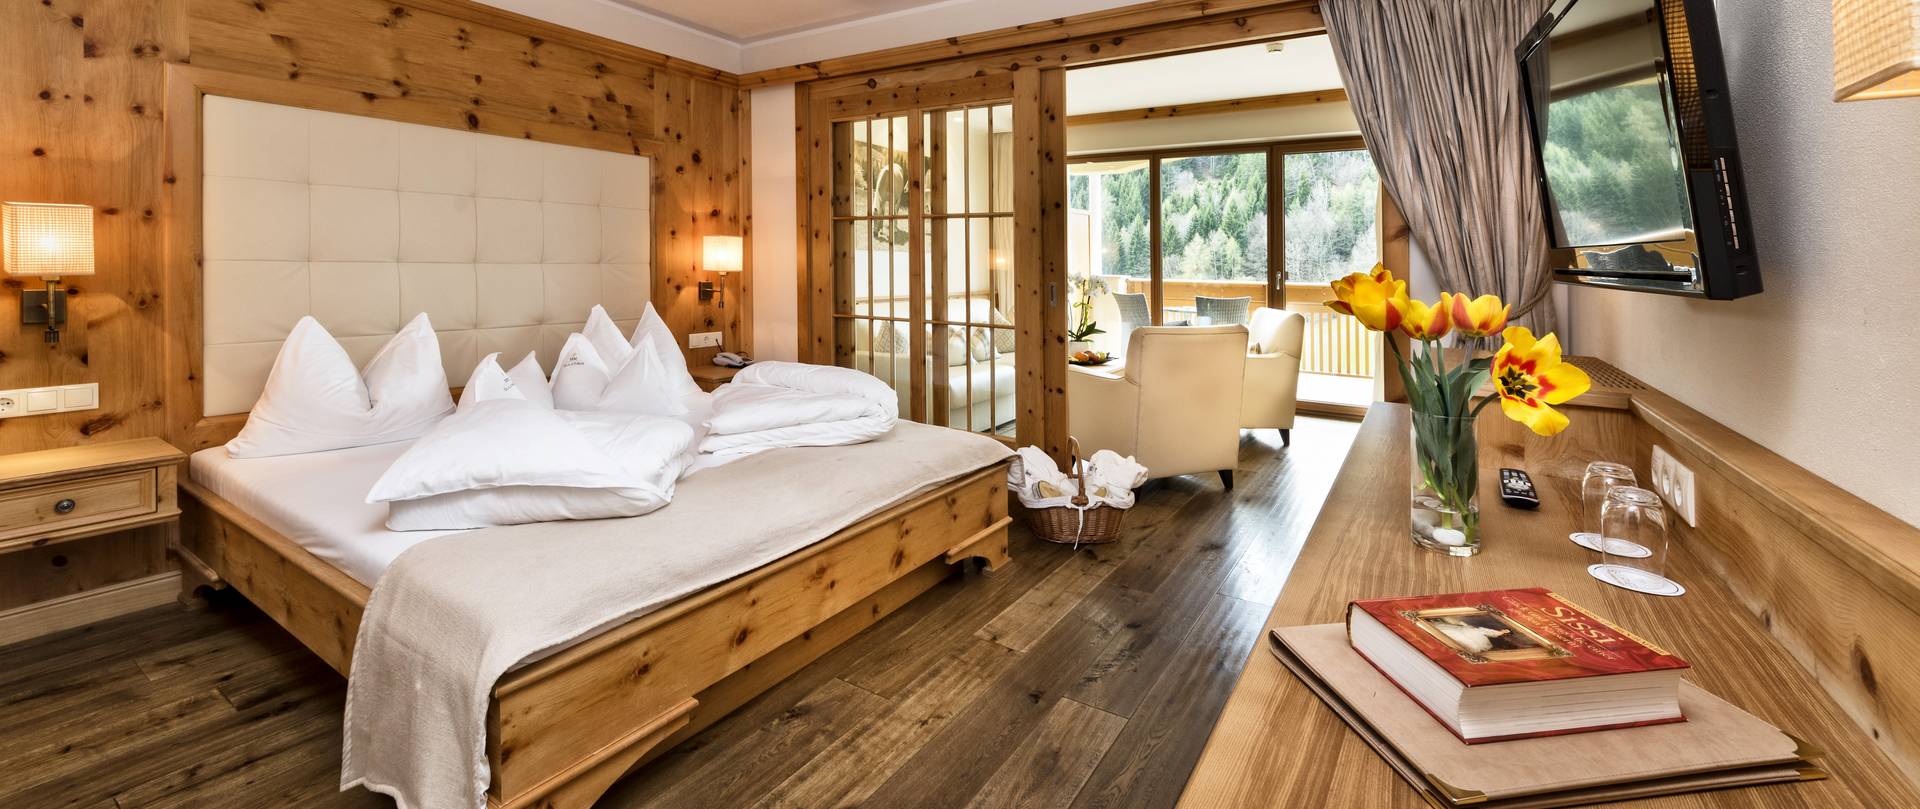 Wohnkomfort Hotel Hafling 4 Sterne | Comfort abitativo Hotel Avelengo 4 stelle | Living comfort Hotel Hafling 4 star